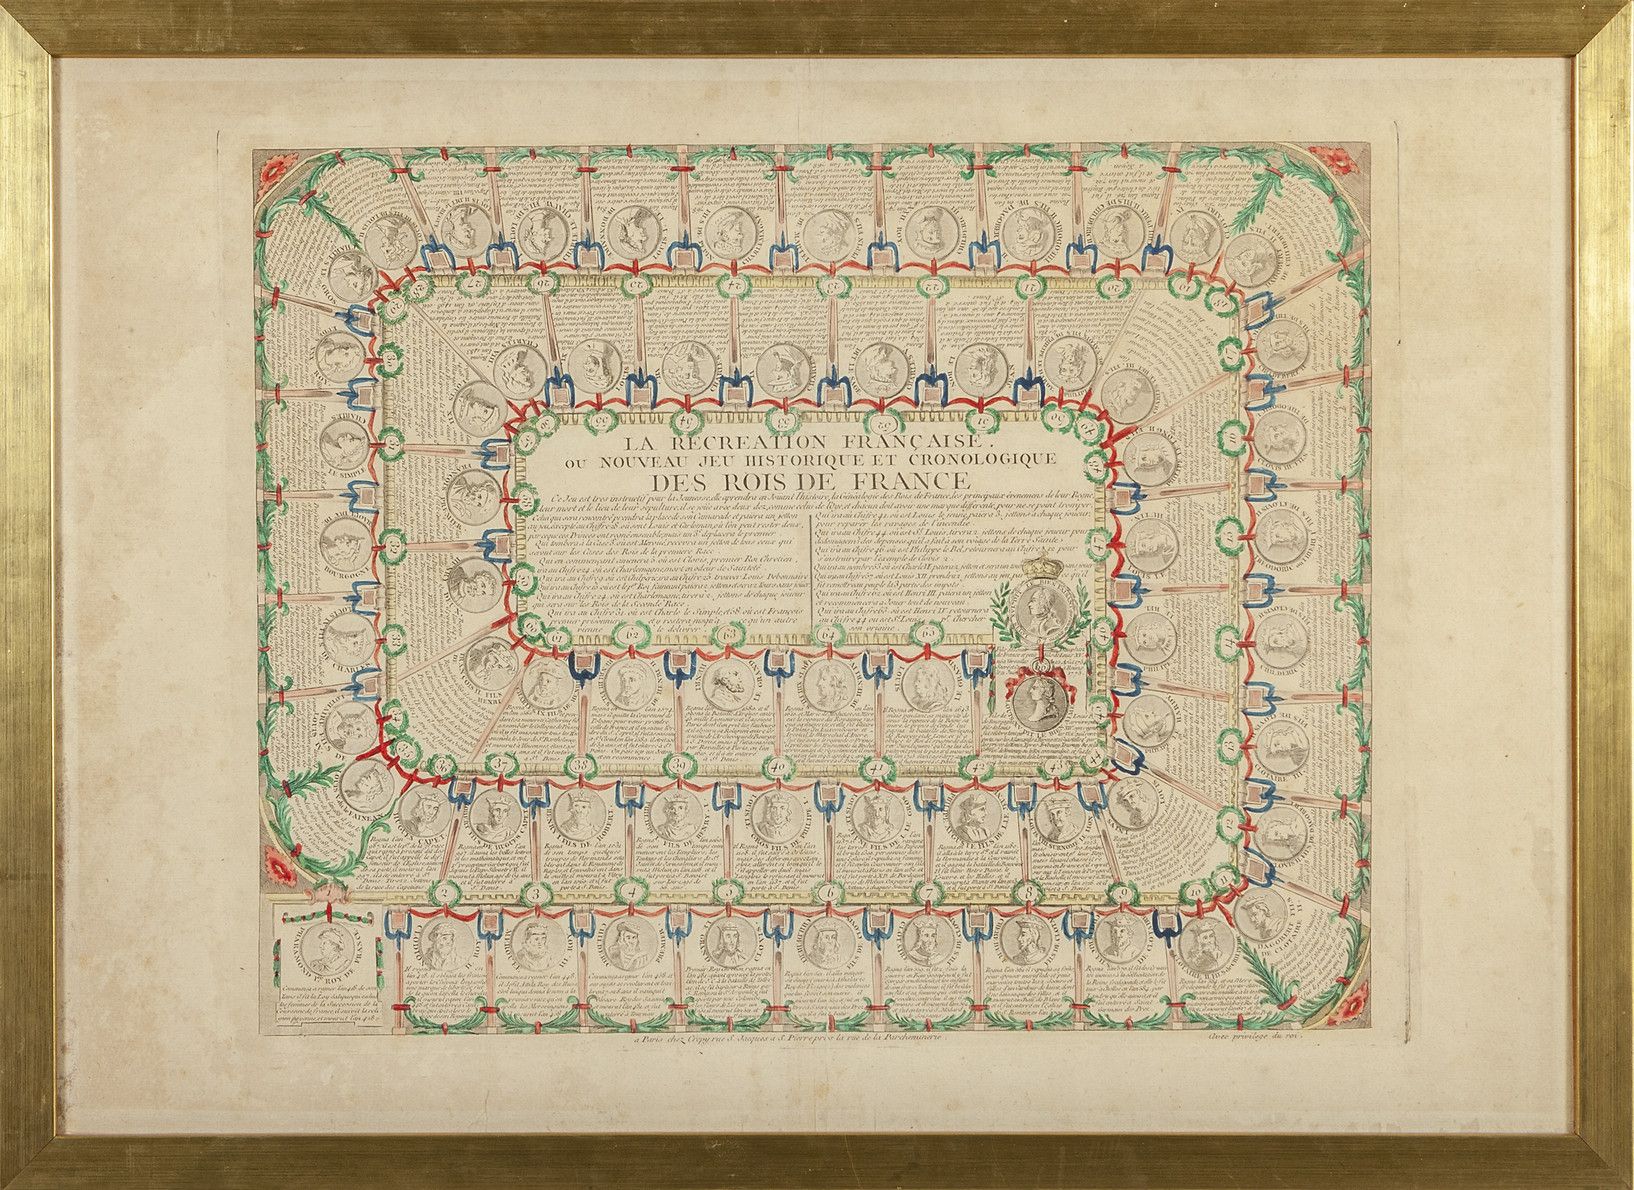 OGGETTISTICA 鹅游戏：18世纪法国国王的新历史和年代游戏
厘米。58x44